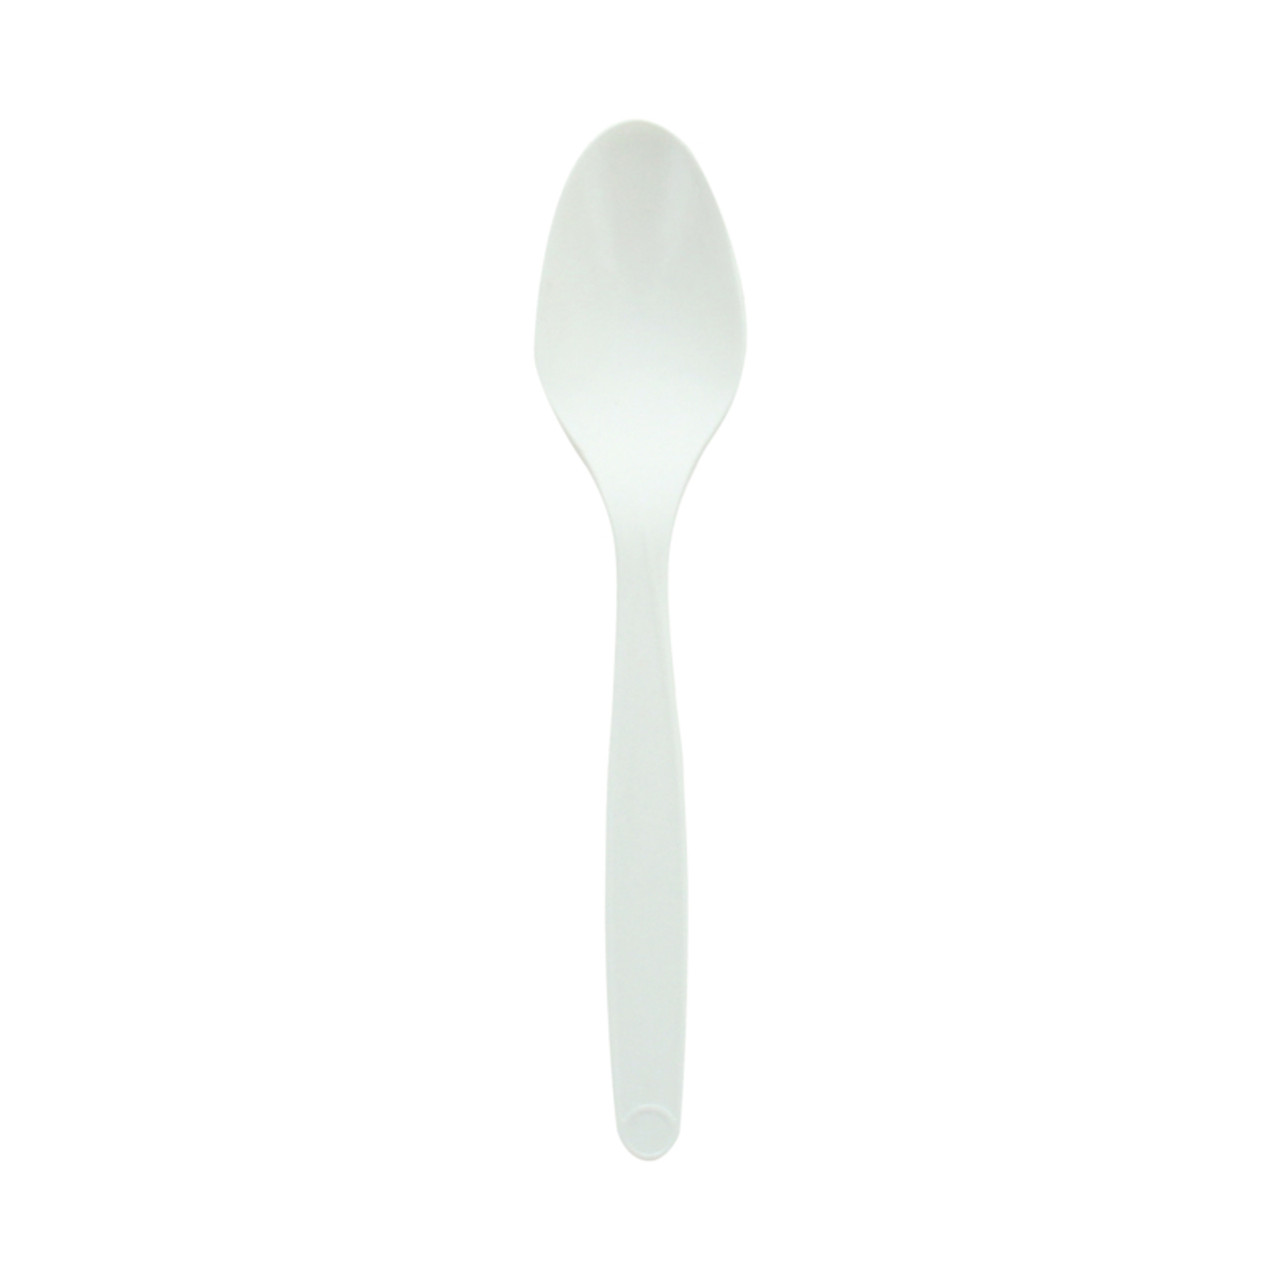 Unwrapped Cornstarch Spoon L:7in - 100pcs/pack